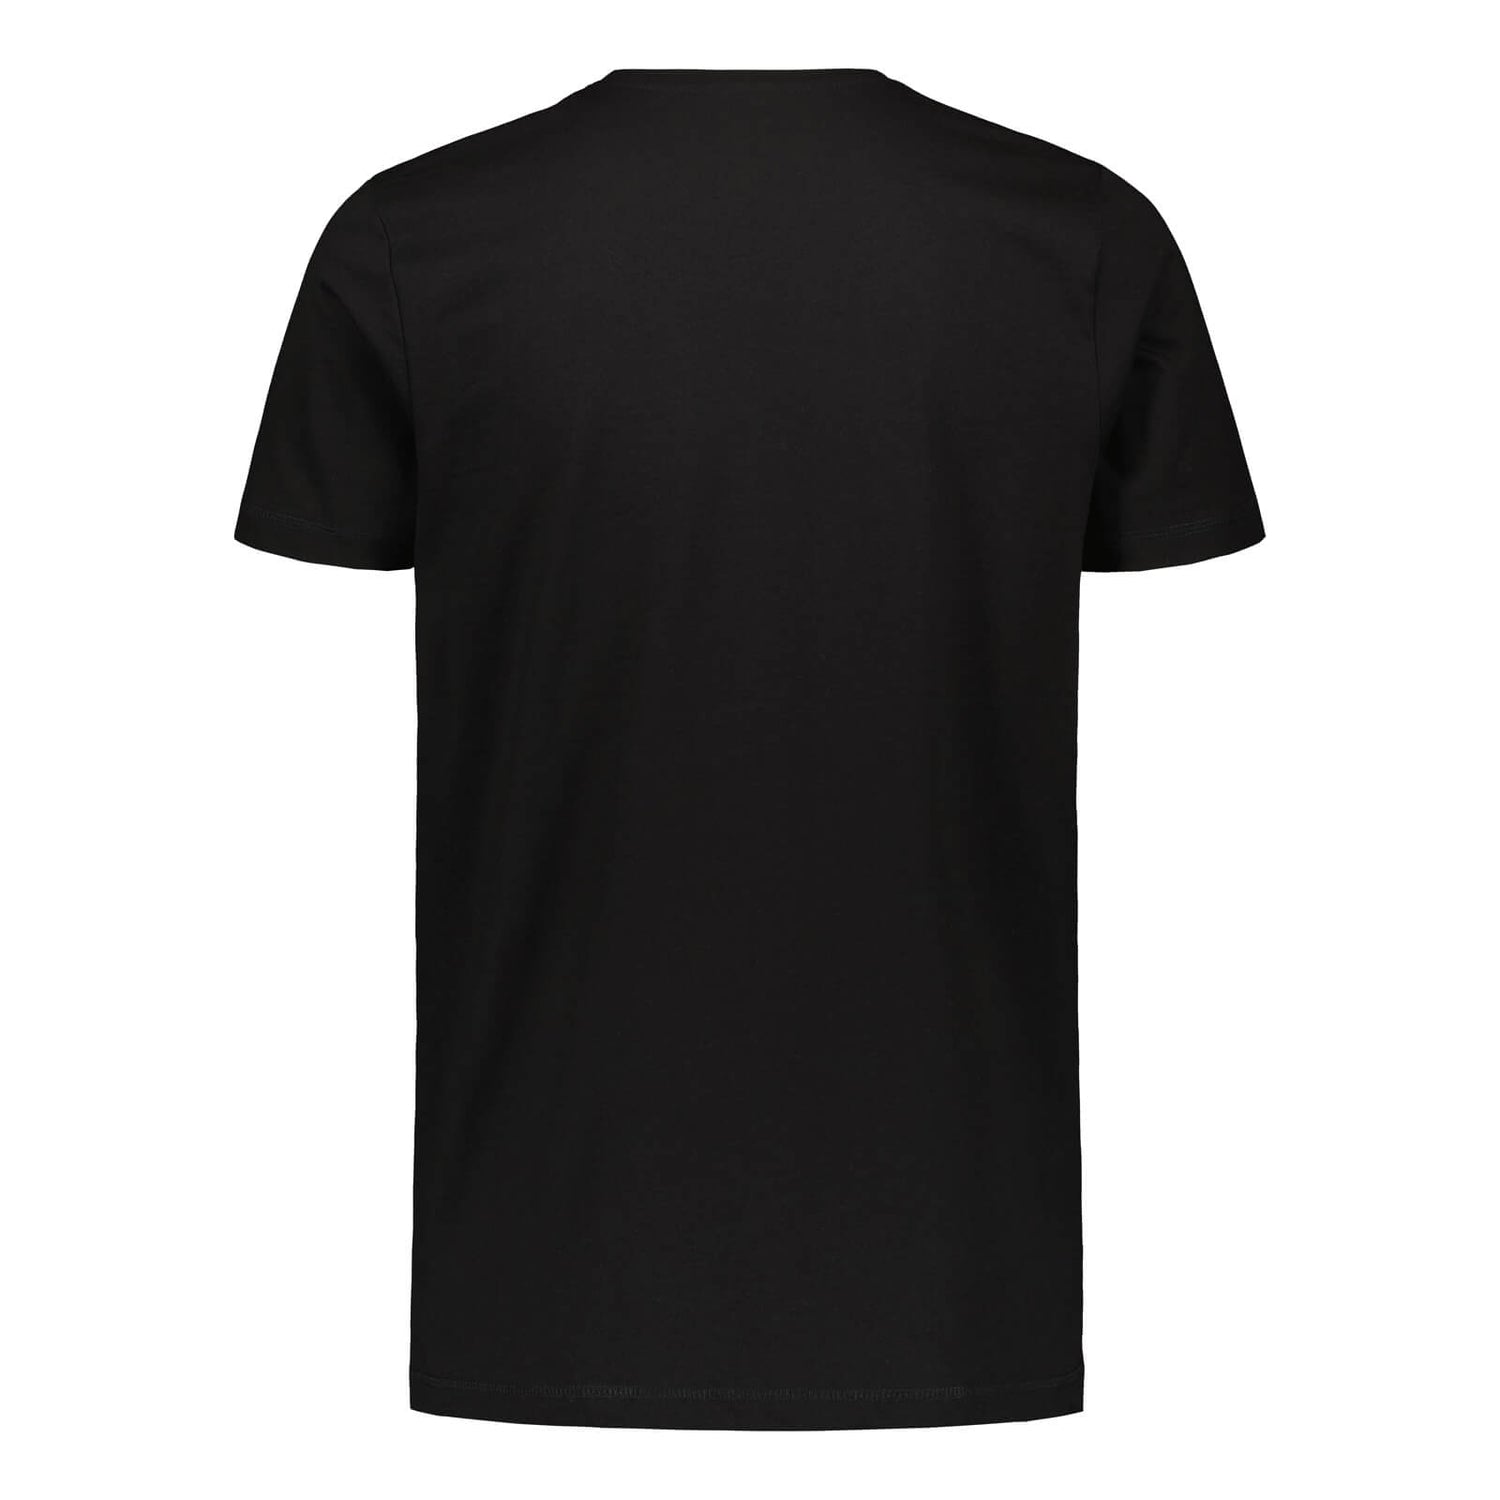 Bubi T-shirt, Black